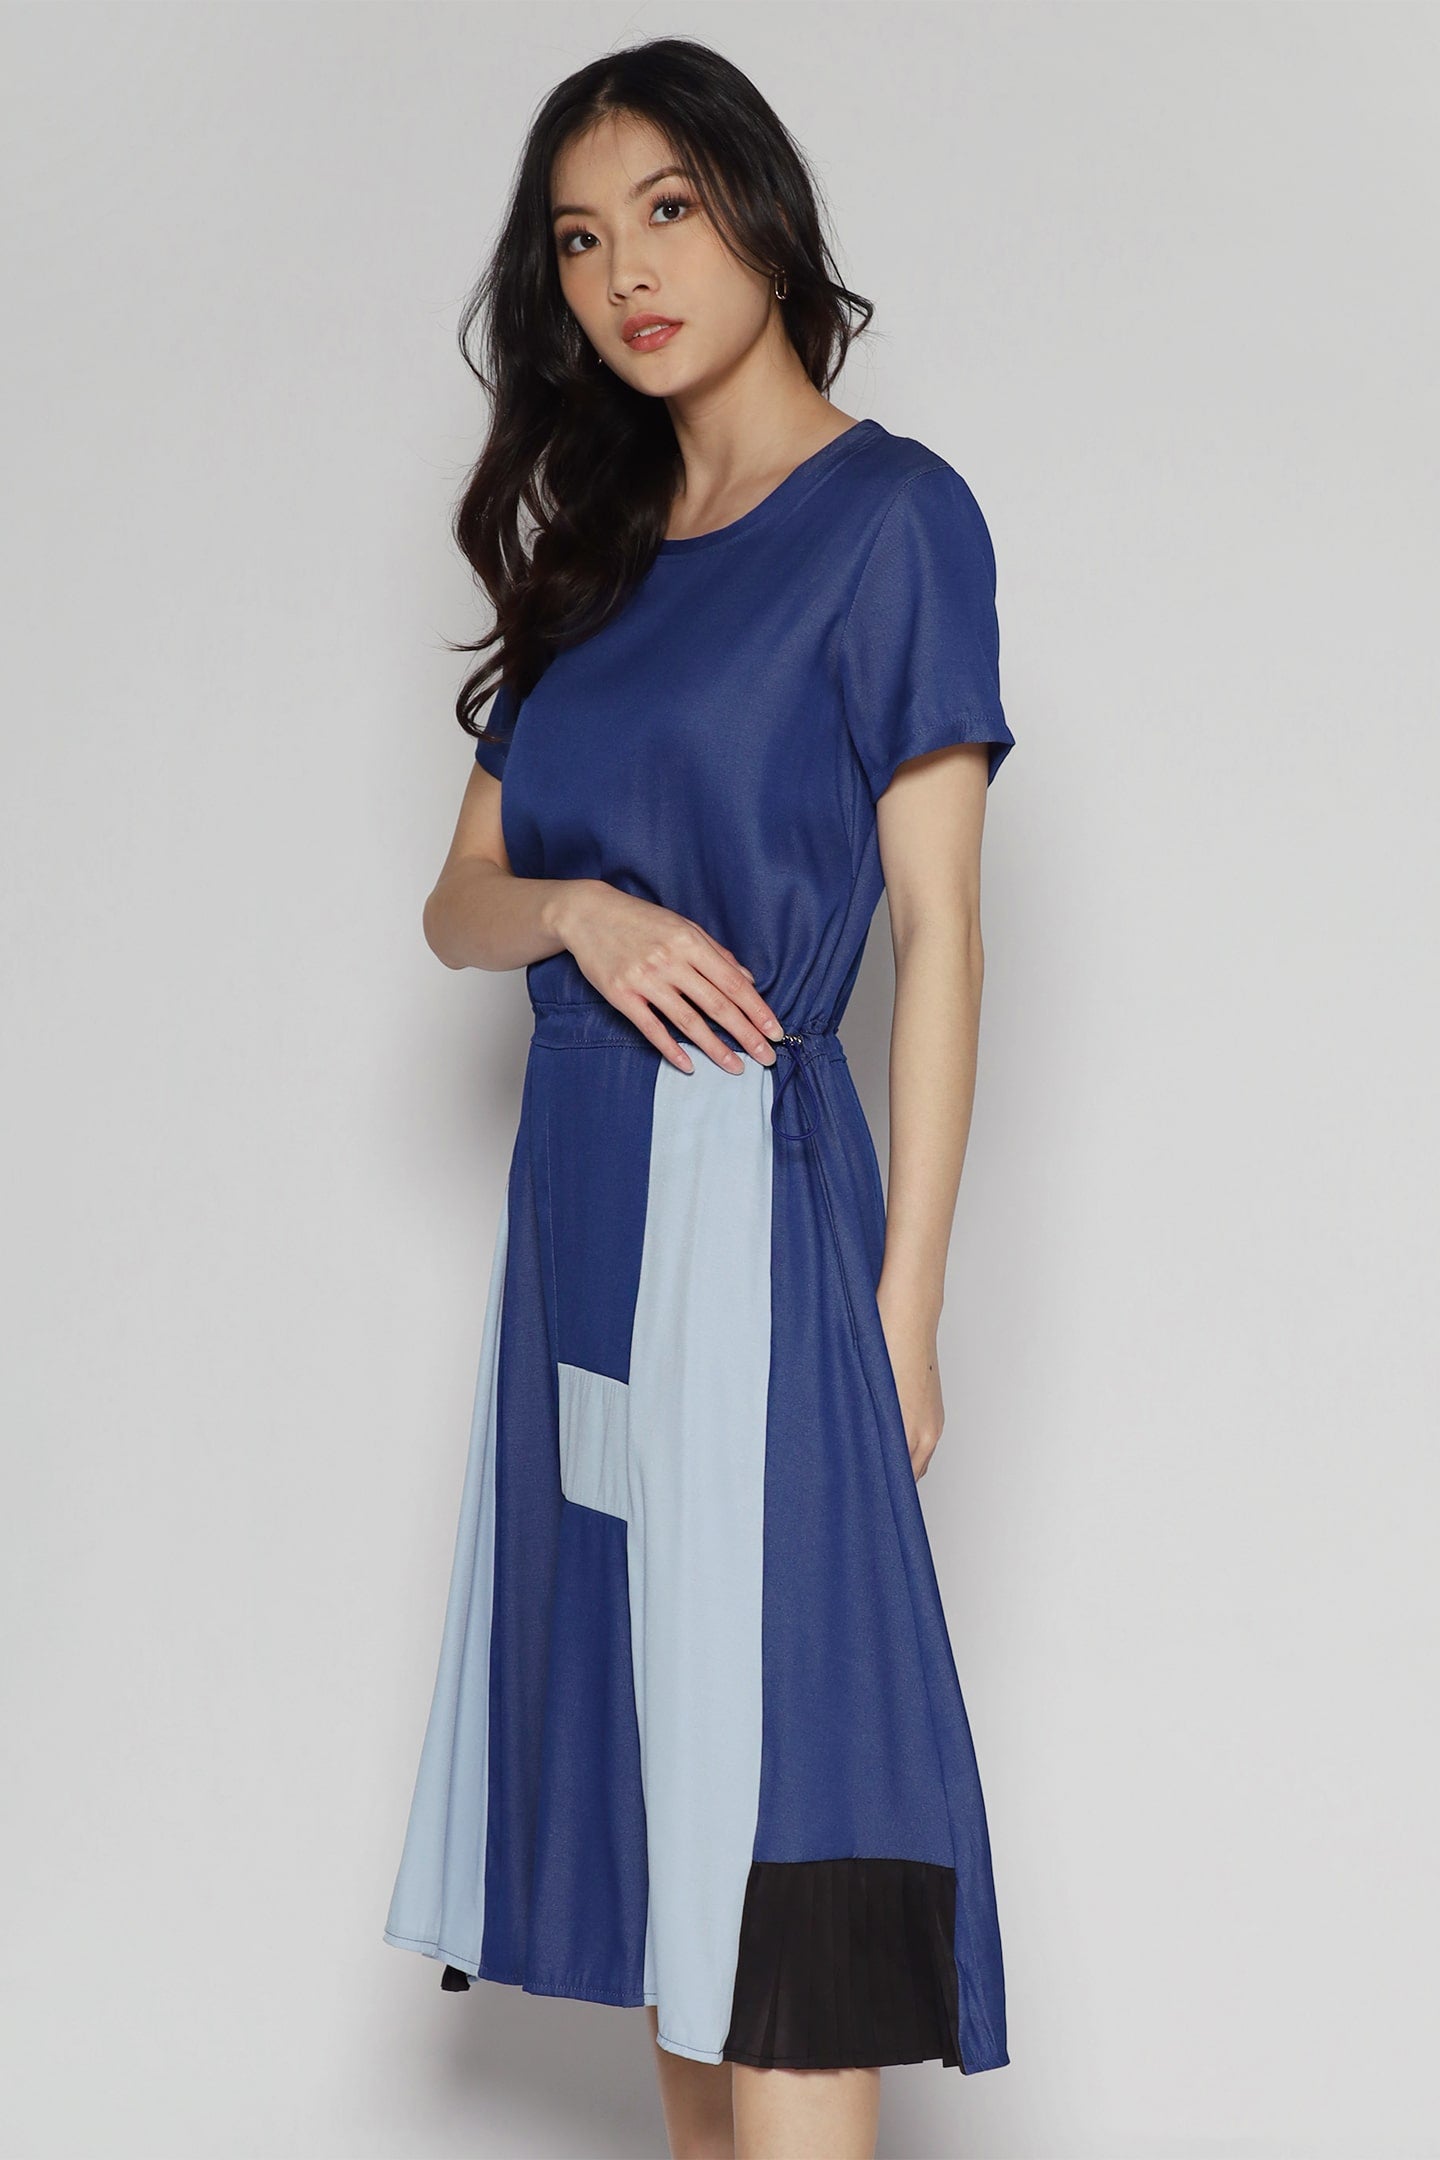 Qian Drawstring Dress in Blue